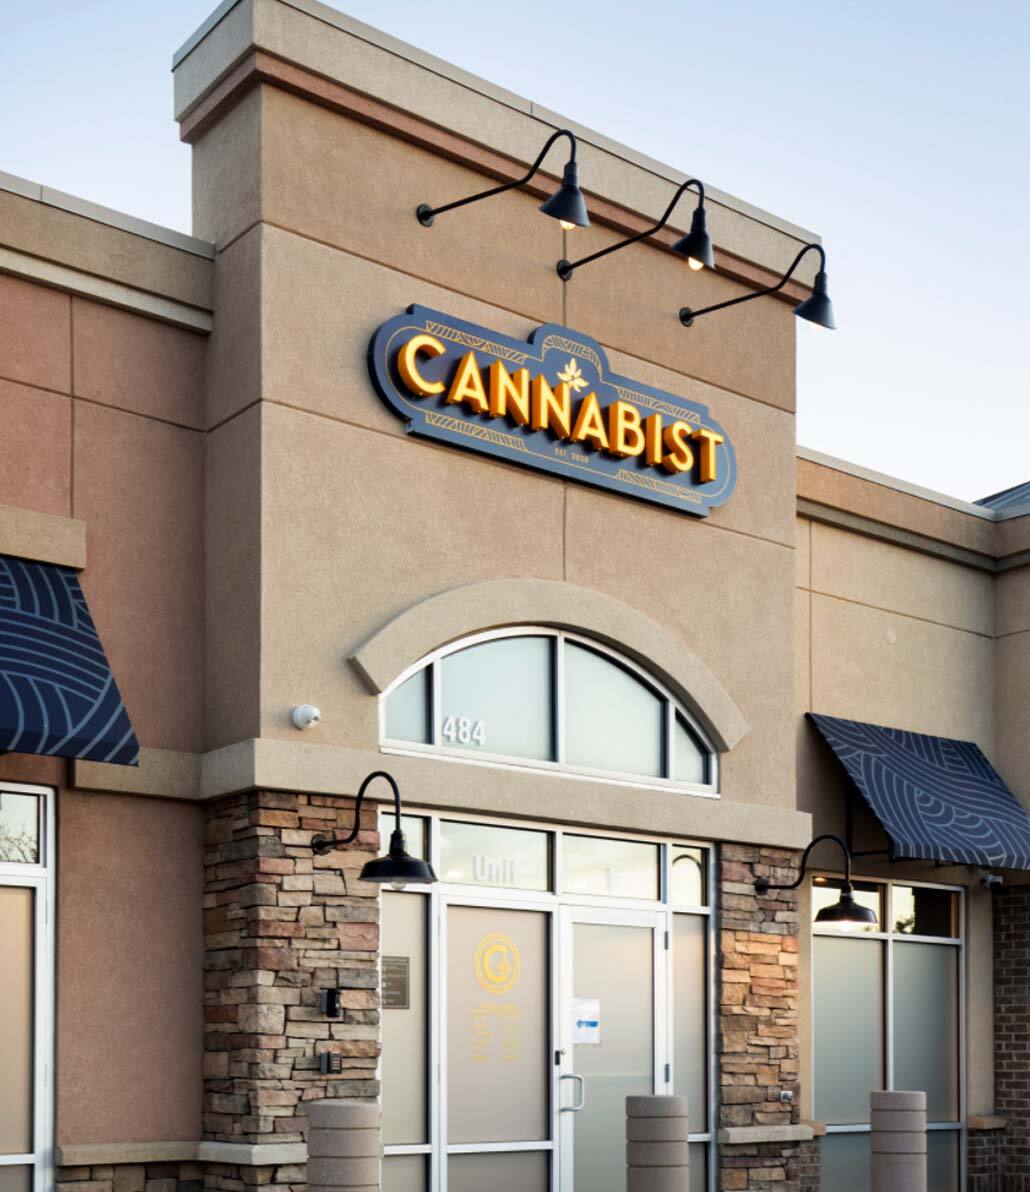 Cannabist storefront in Springville, Utah